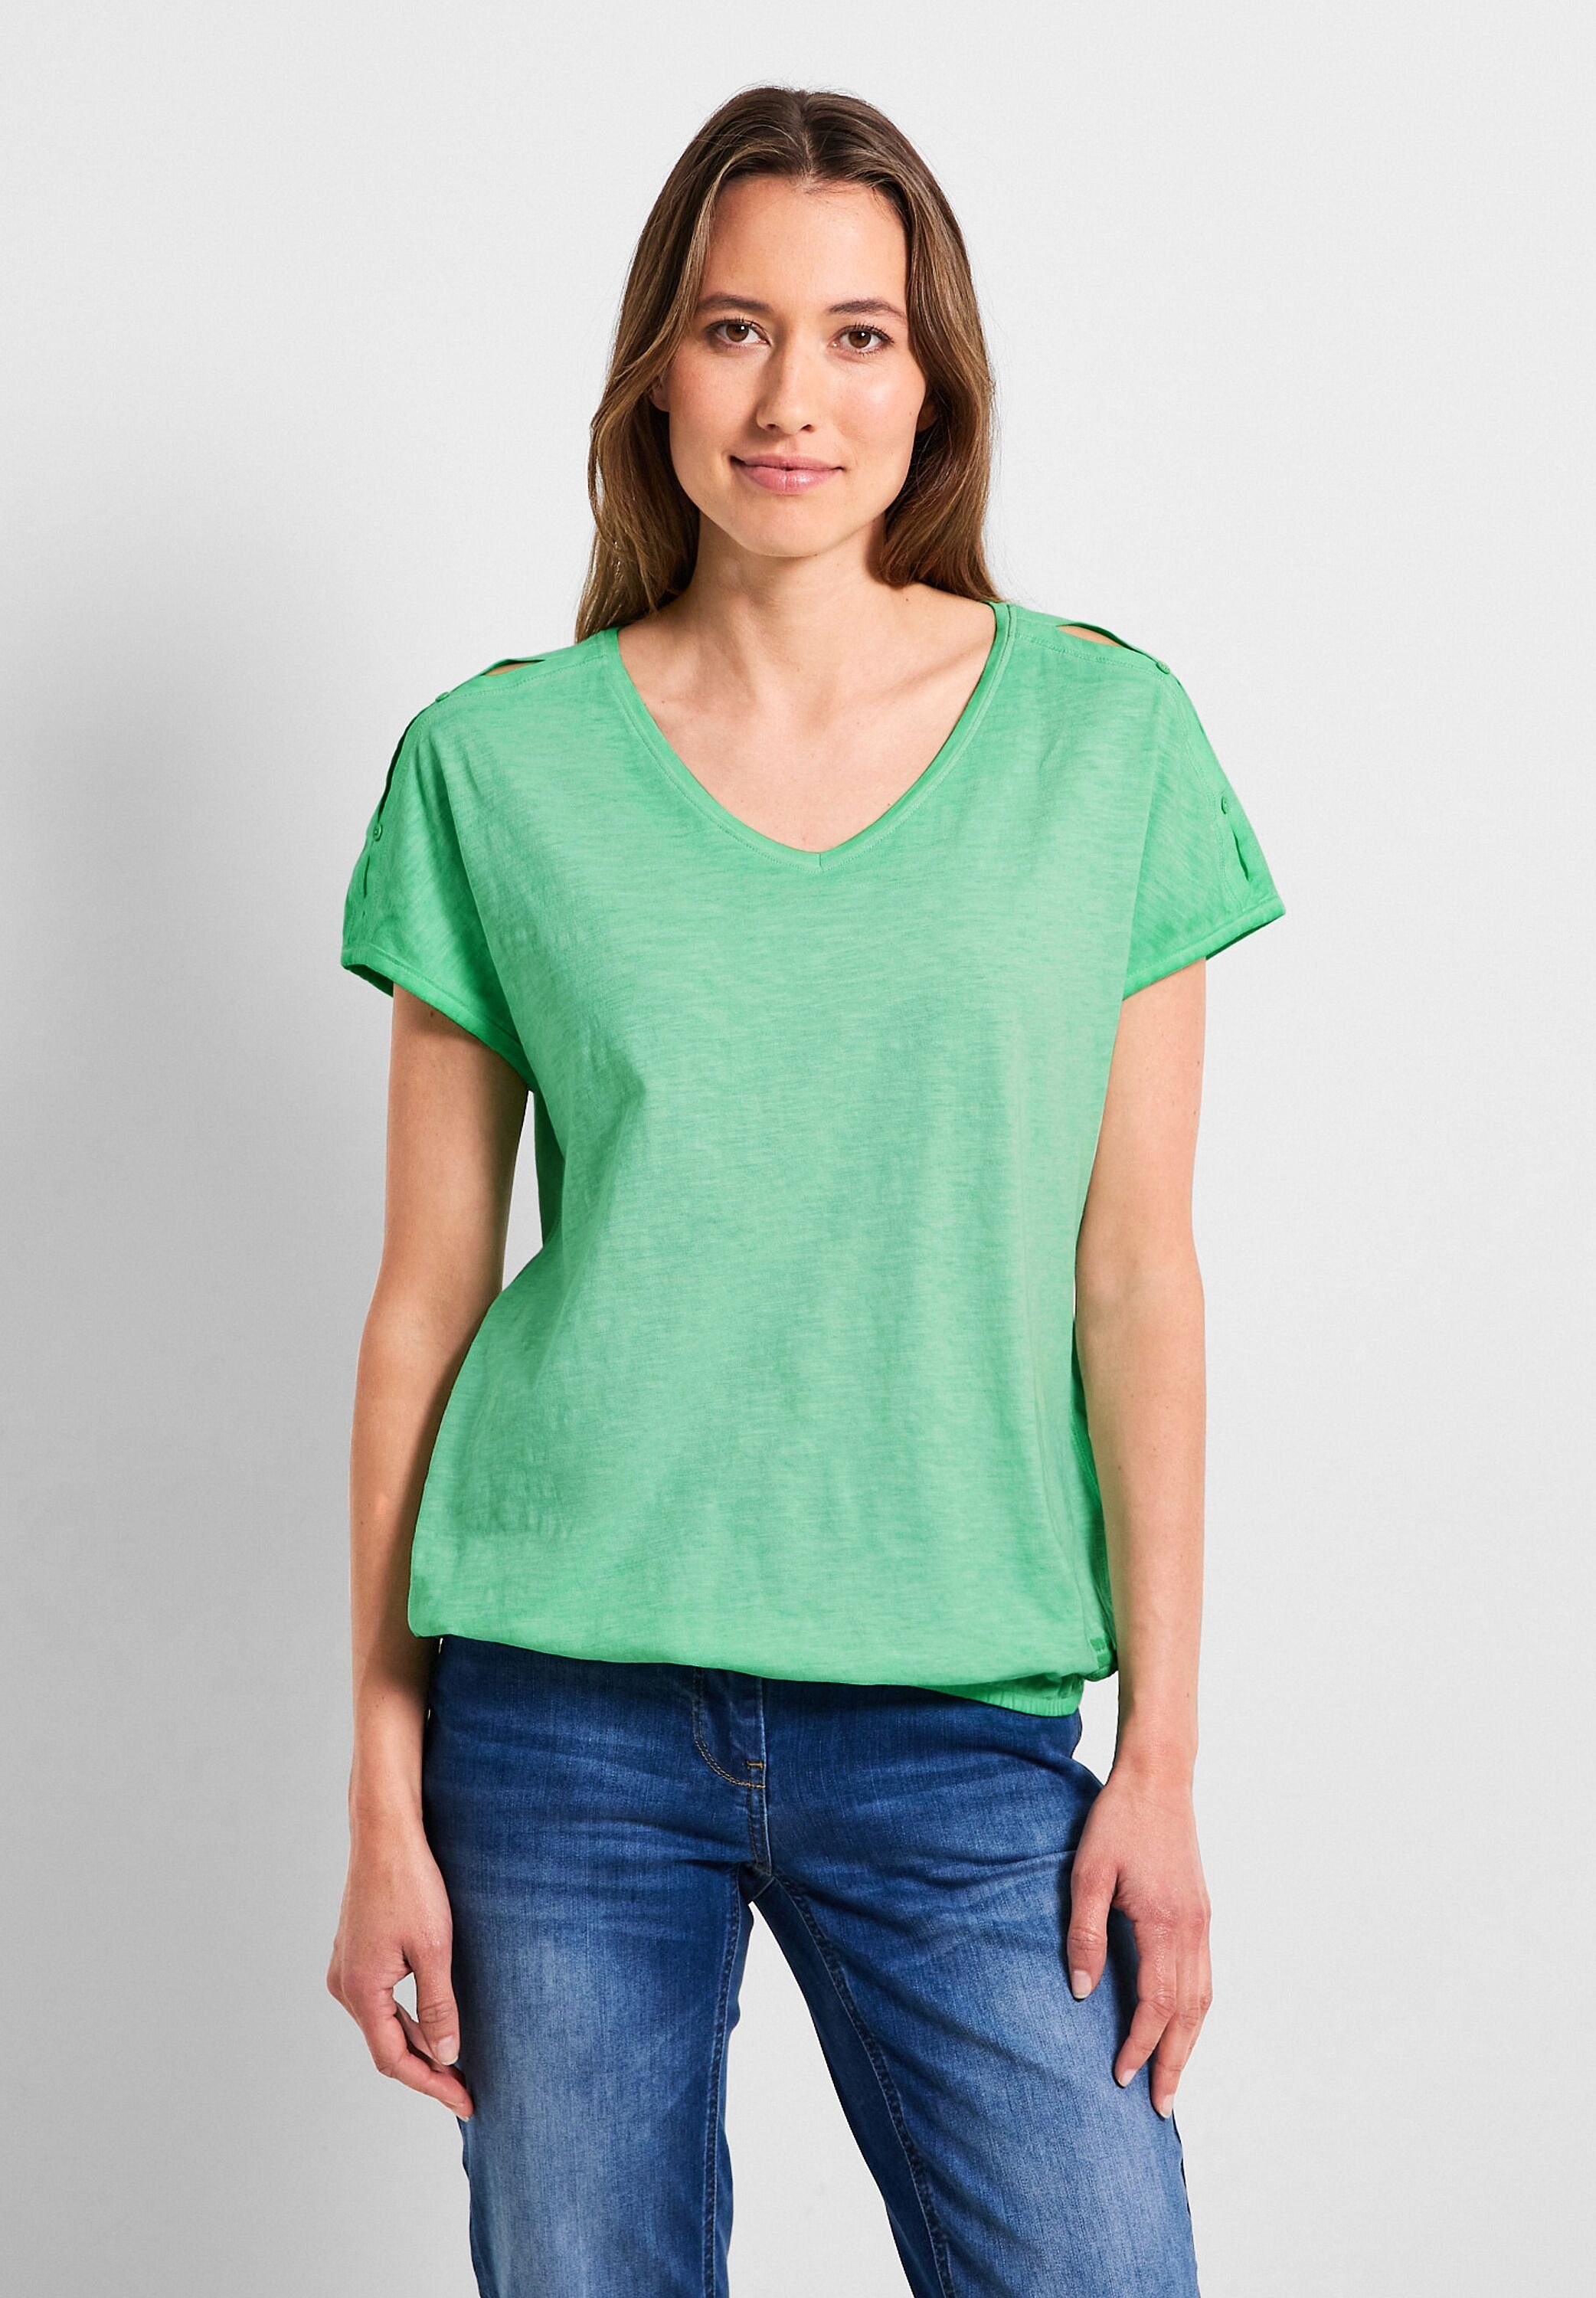 Cecil T-Shirt mit Cut-Outs an den Schultern, Cut-Out Designs an der  Schulter, Gummizugsaum, Farbfamilie..: Grün